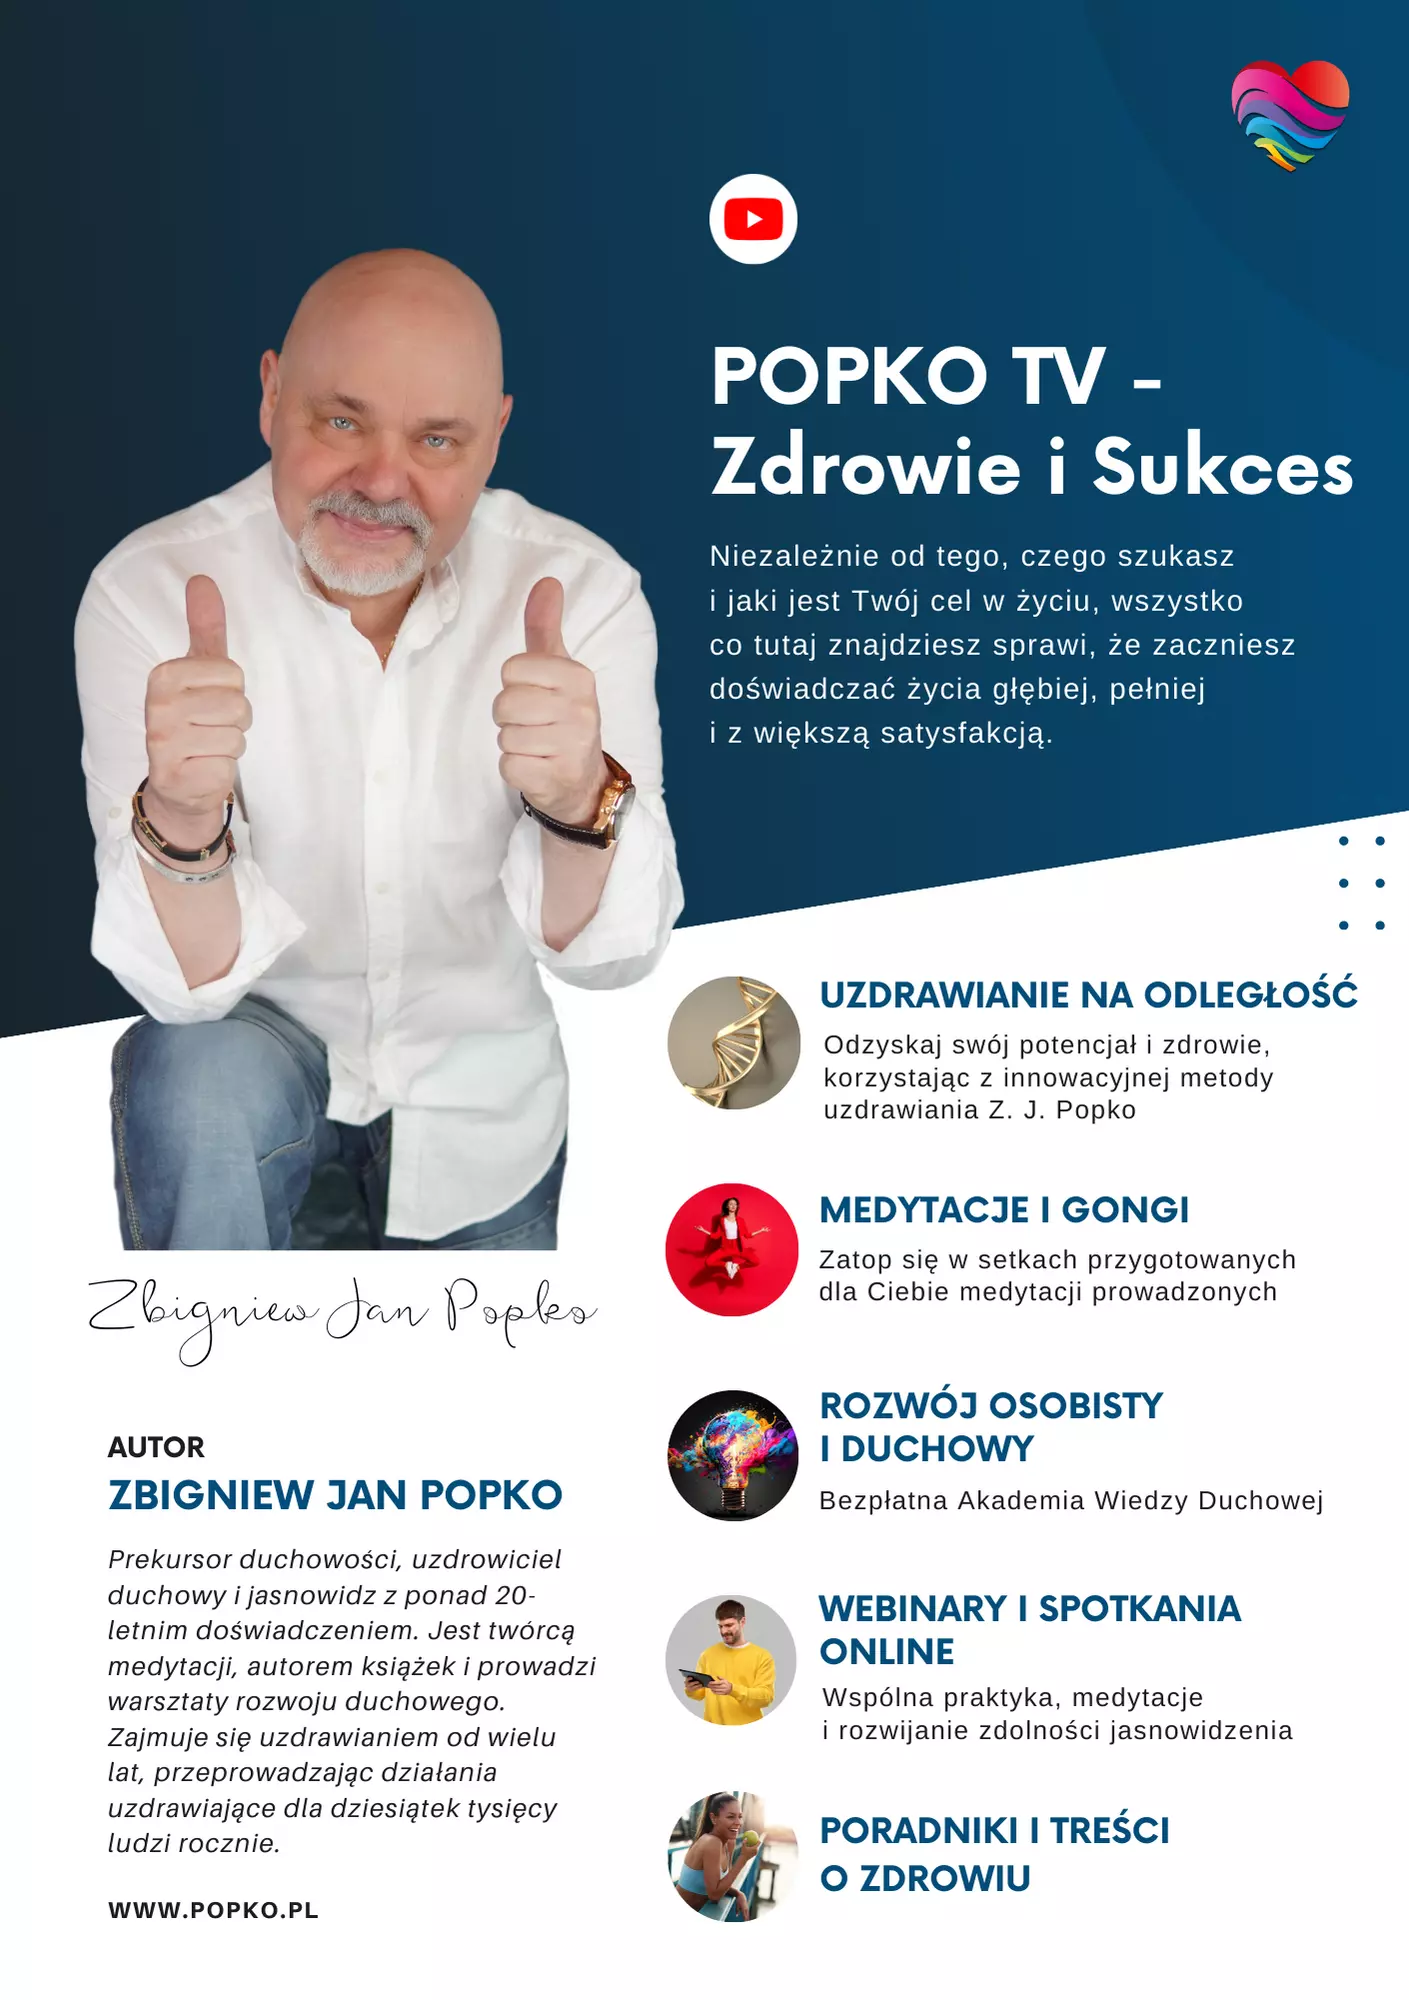 POPKO TV